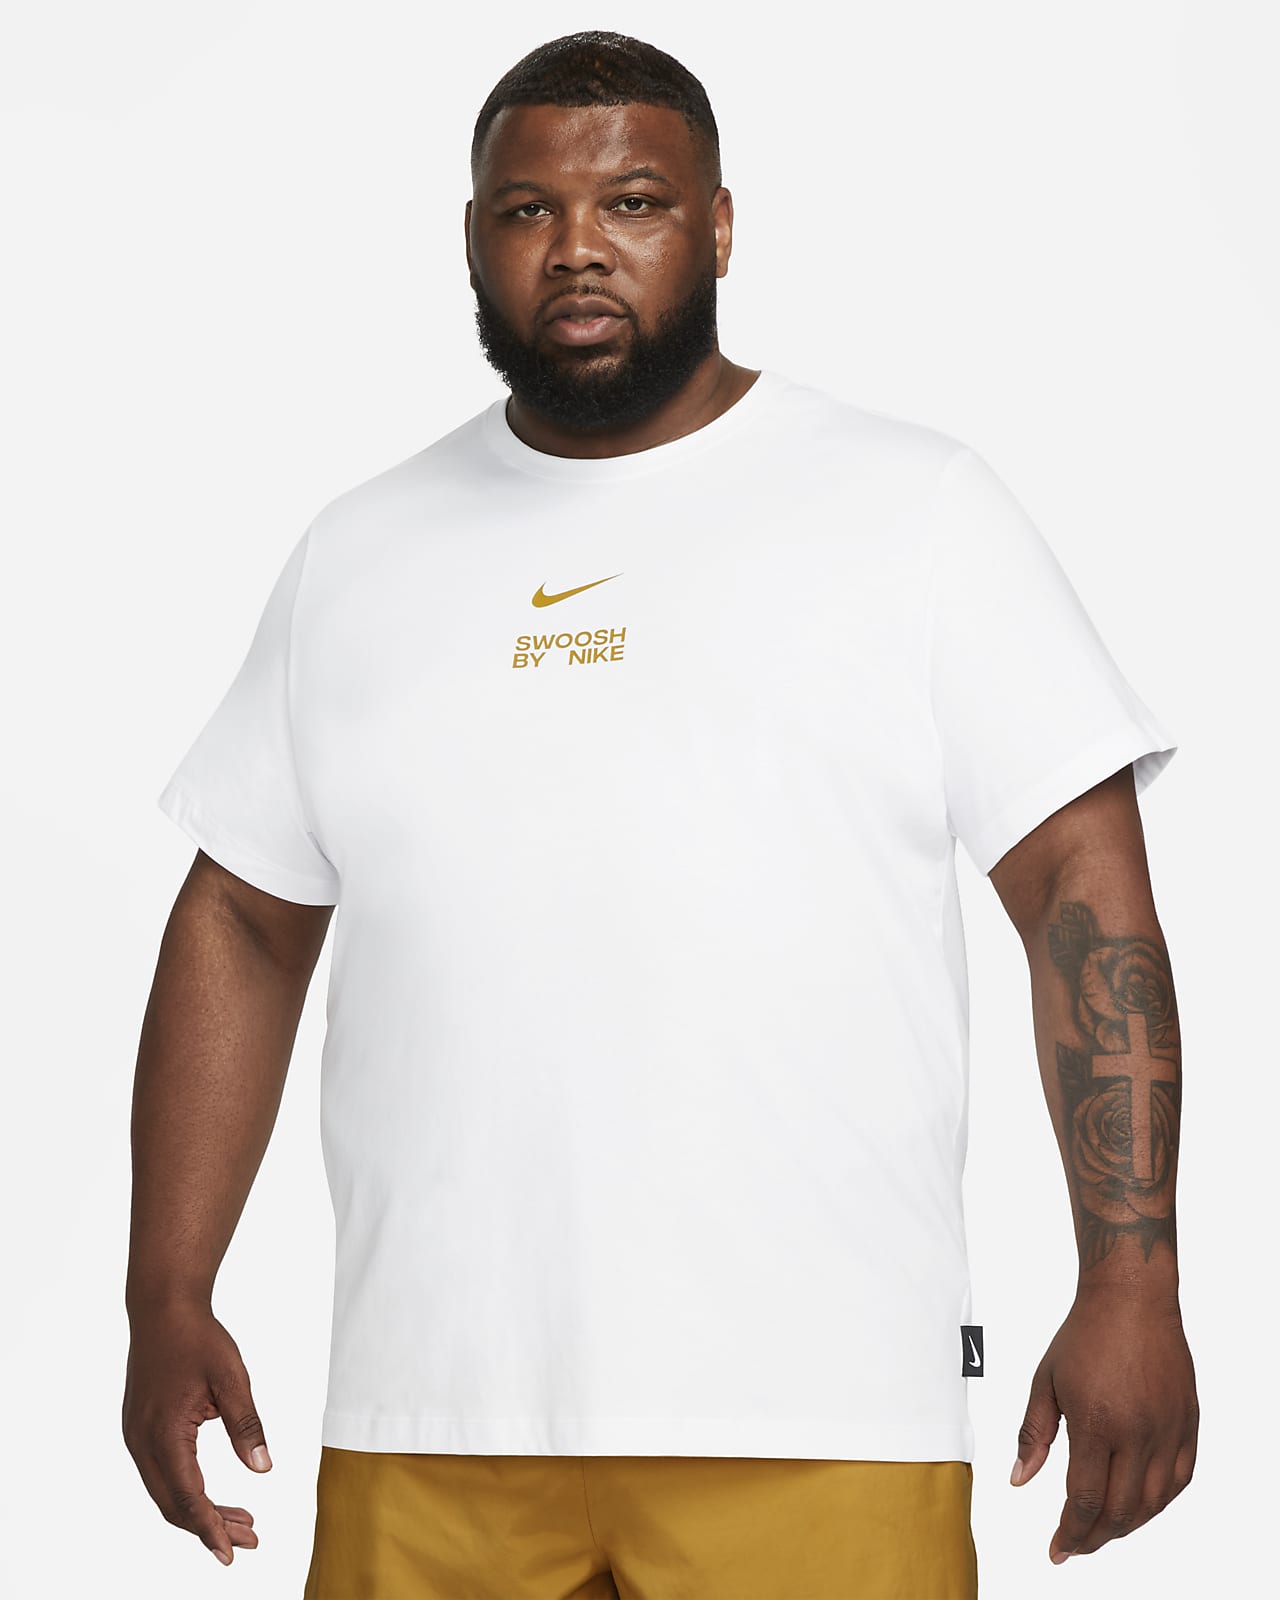 Nike Men's T-Shirt. Nike